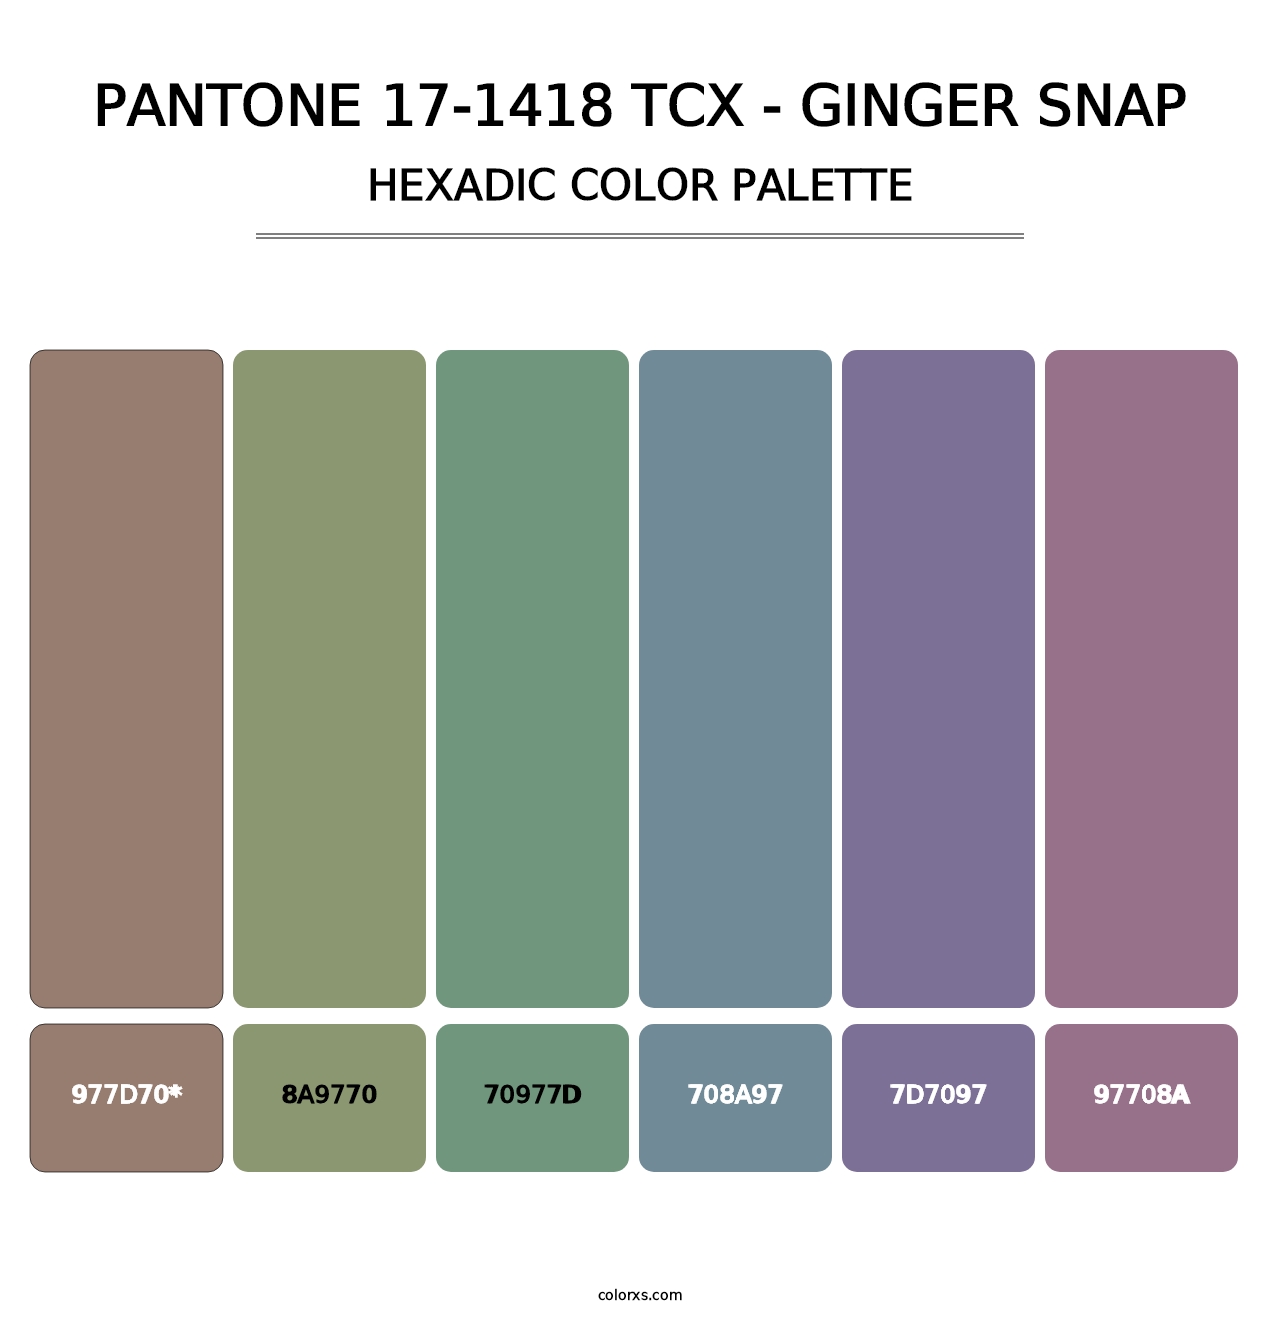 PANTONE 17-1418 TCX - Ginger Snap - Hexadic Color Palette